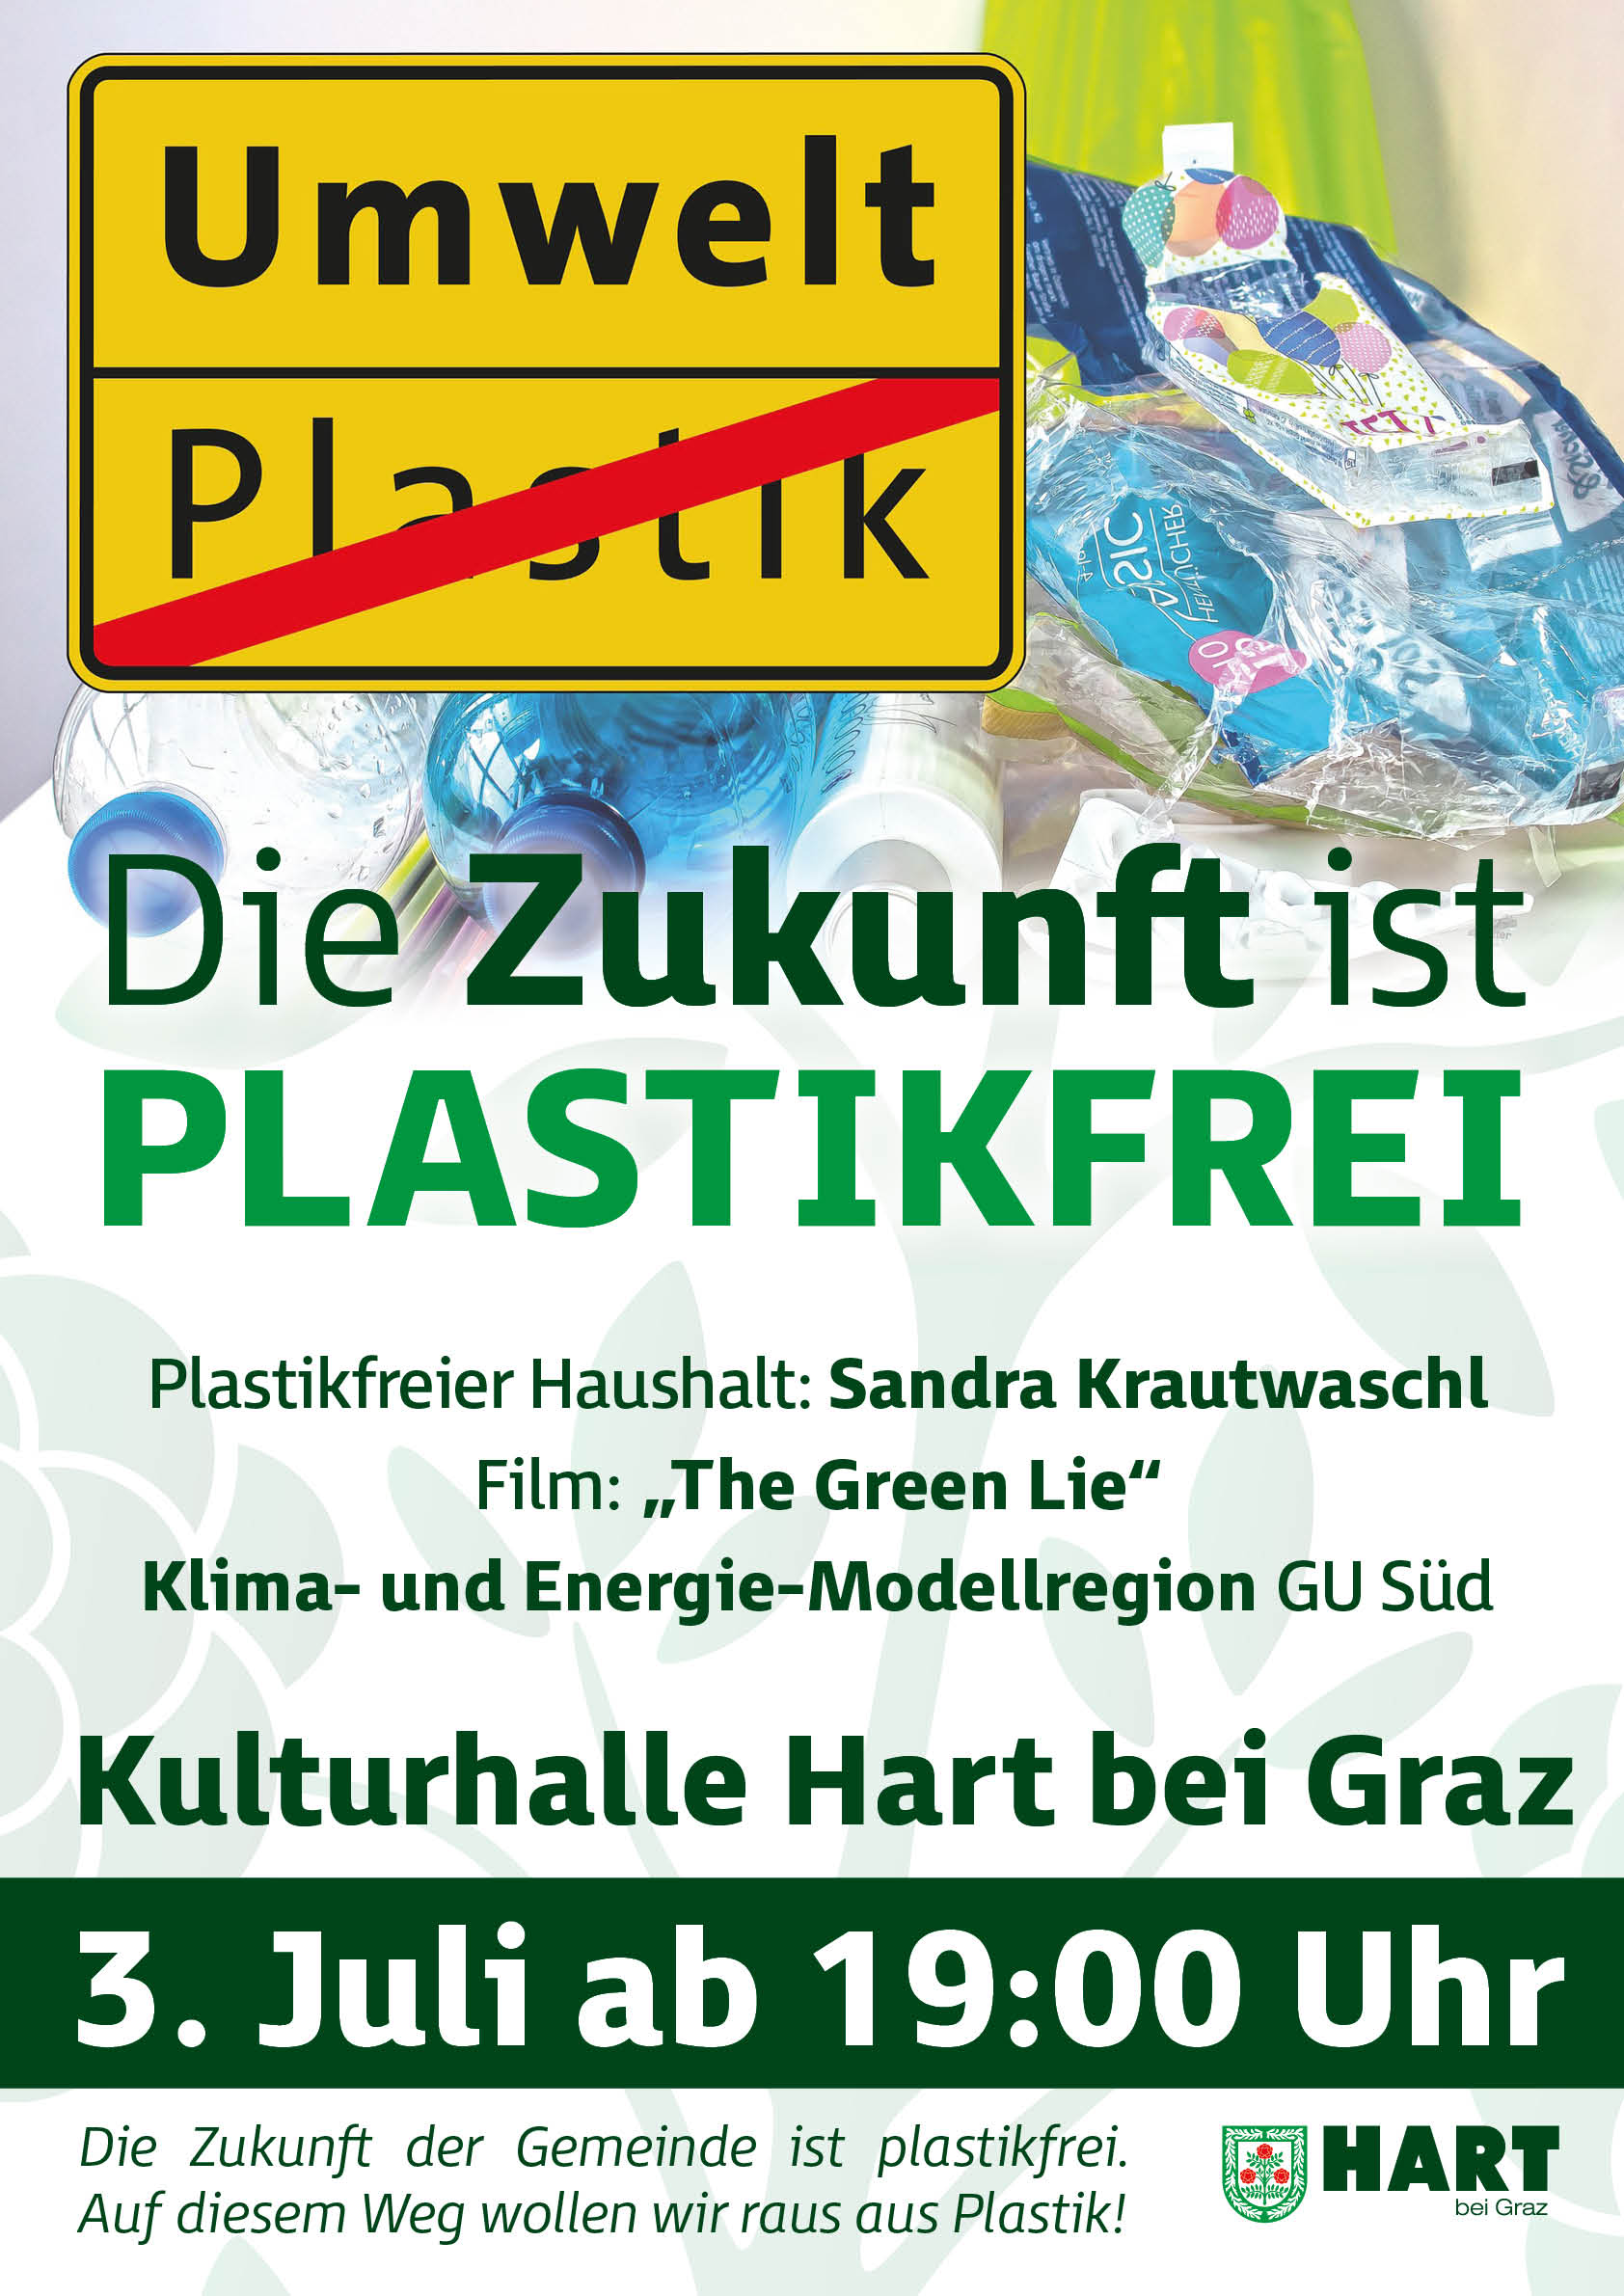 2019 Plastikfrei Plakat final 019-0.jpg